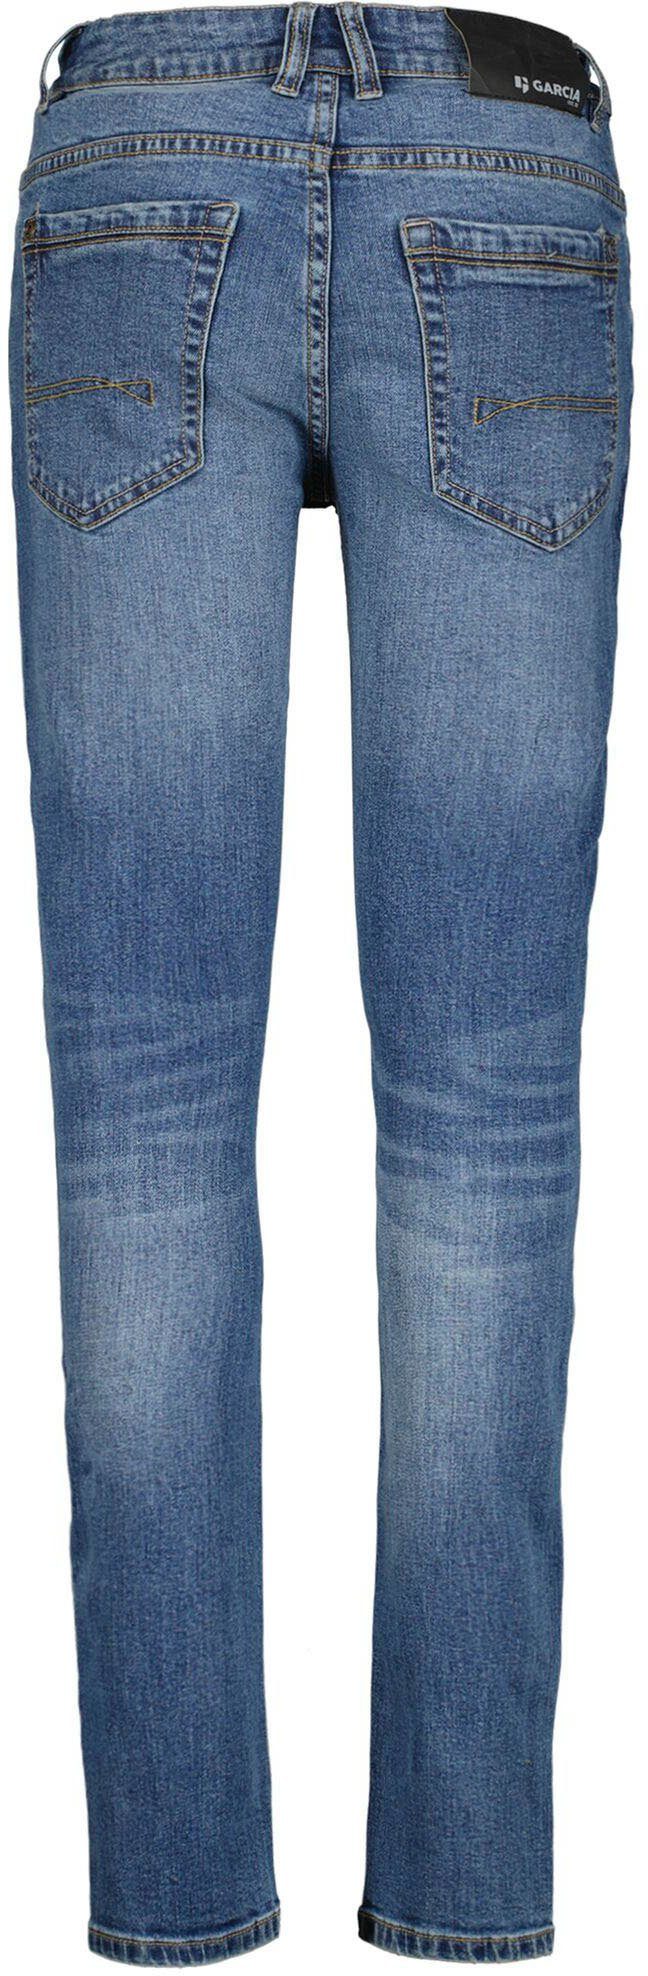 Garcia 5-Pocket-Jeans Lazlo mit Destroyed-Detail am light used BOYS Knie, for